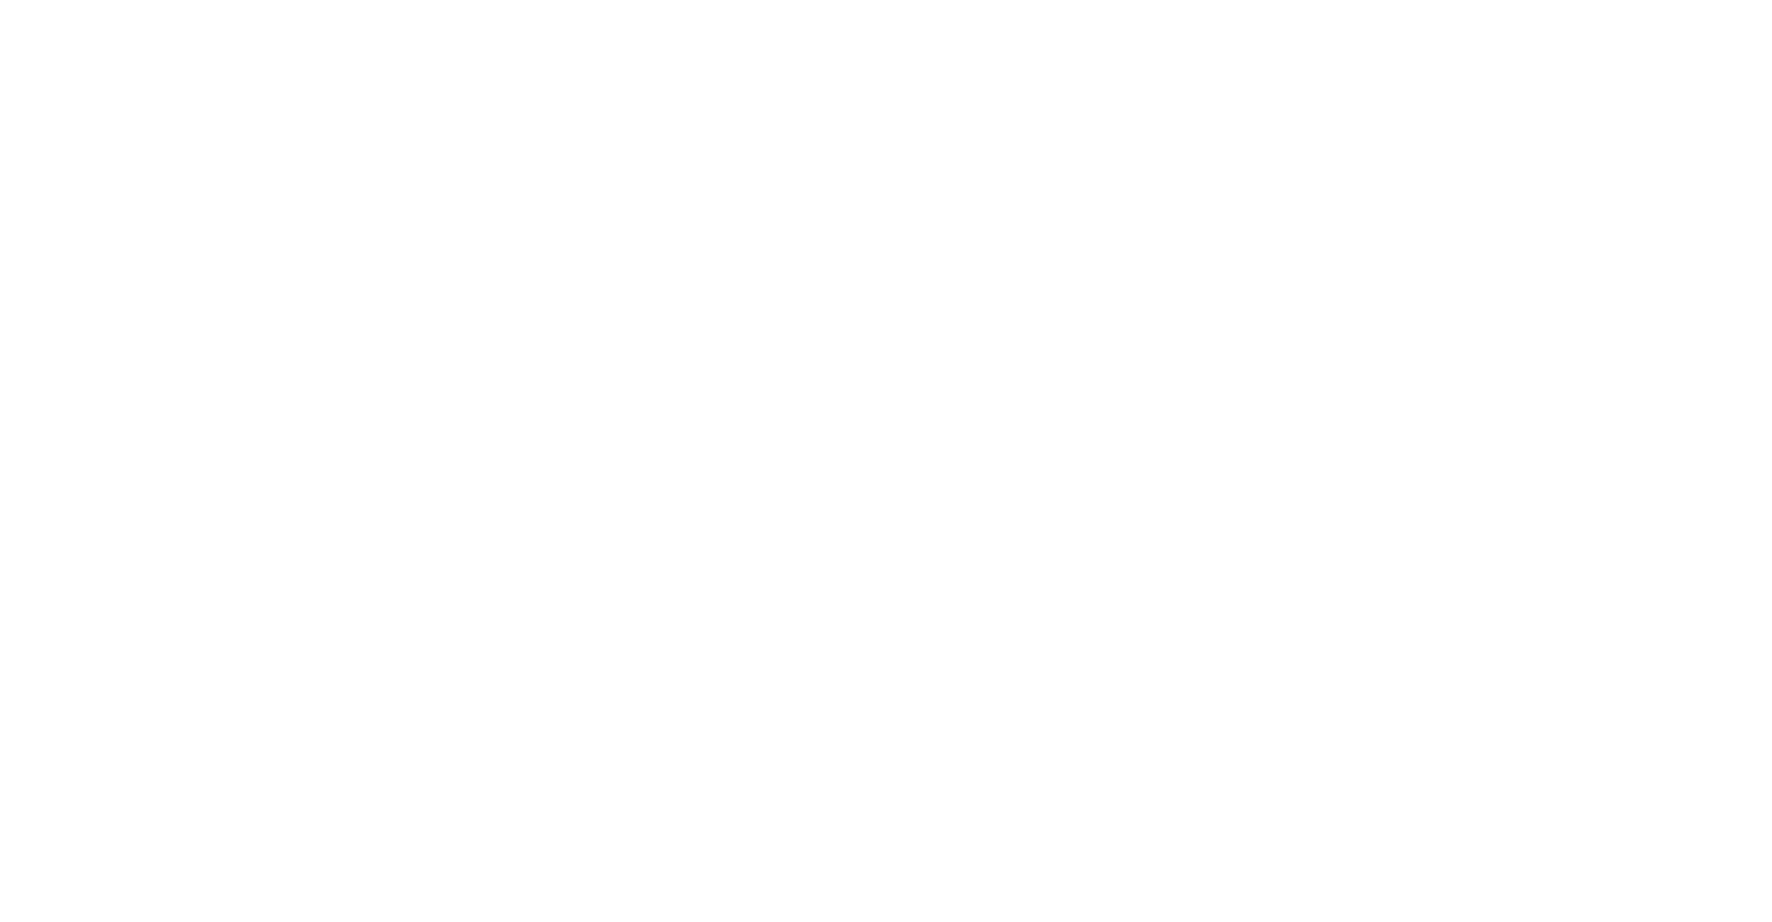 The Academy at Harmless E-Learning